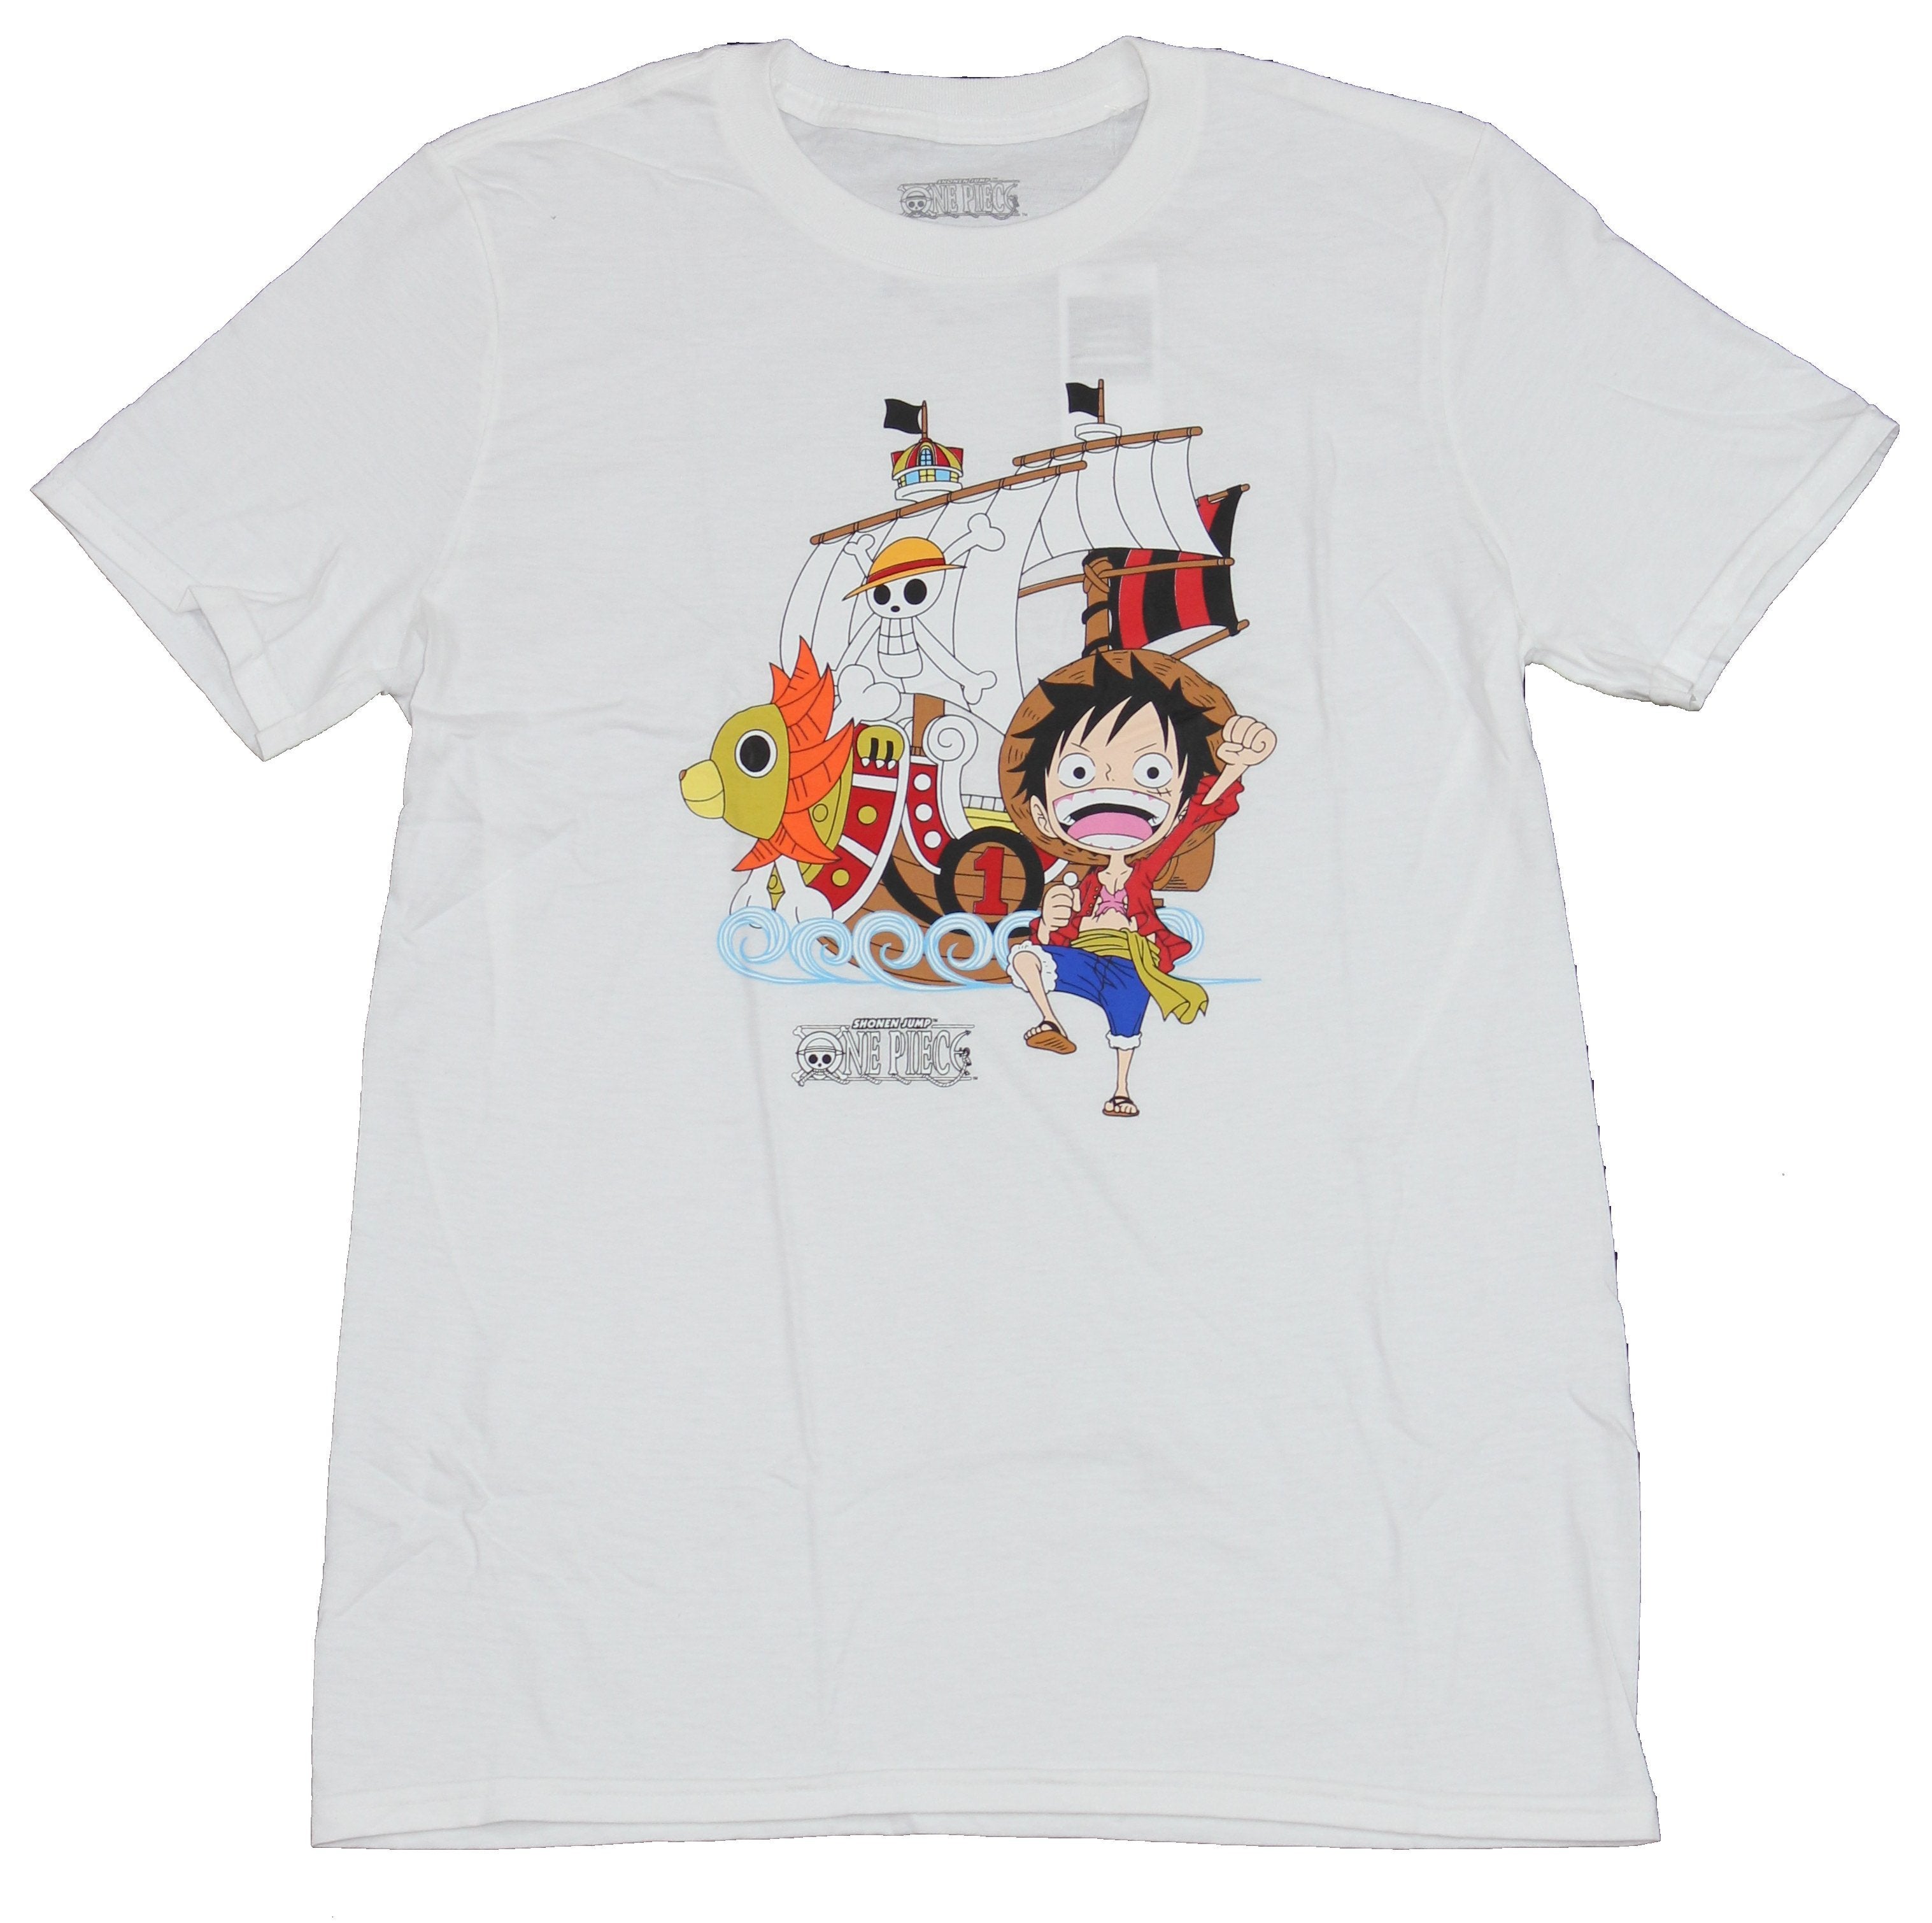 One Piece T-Shirt - Luffy Movie Z official merch